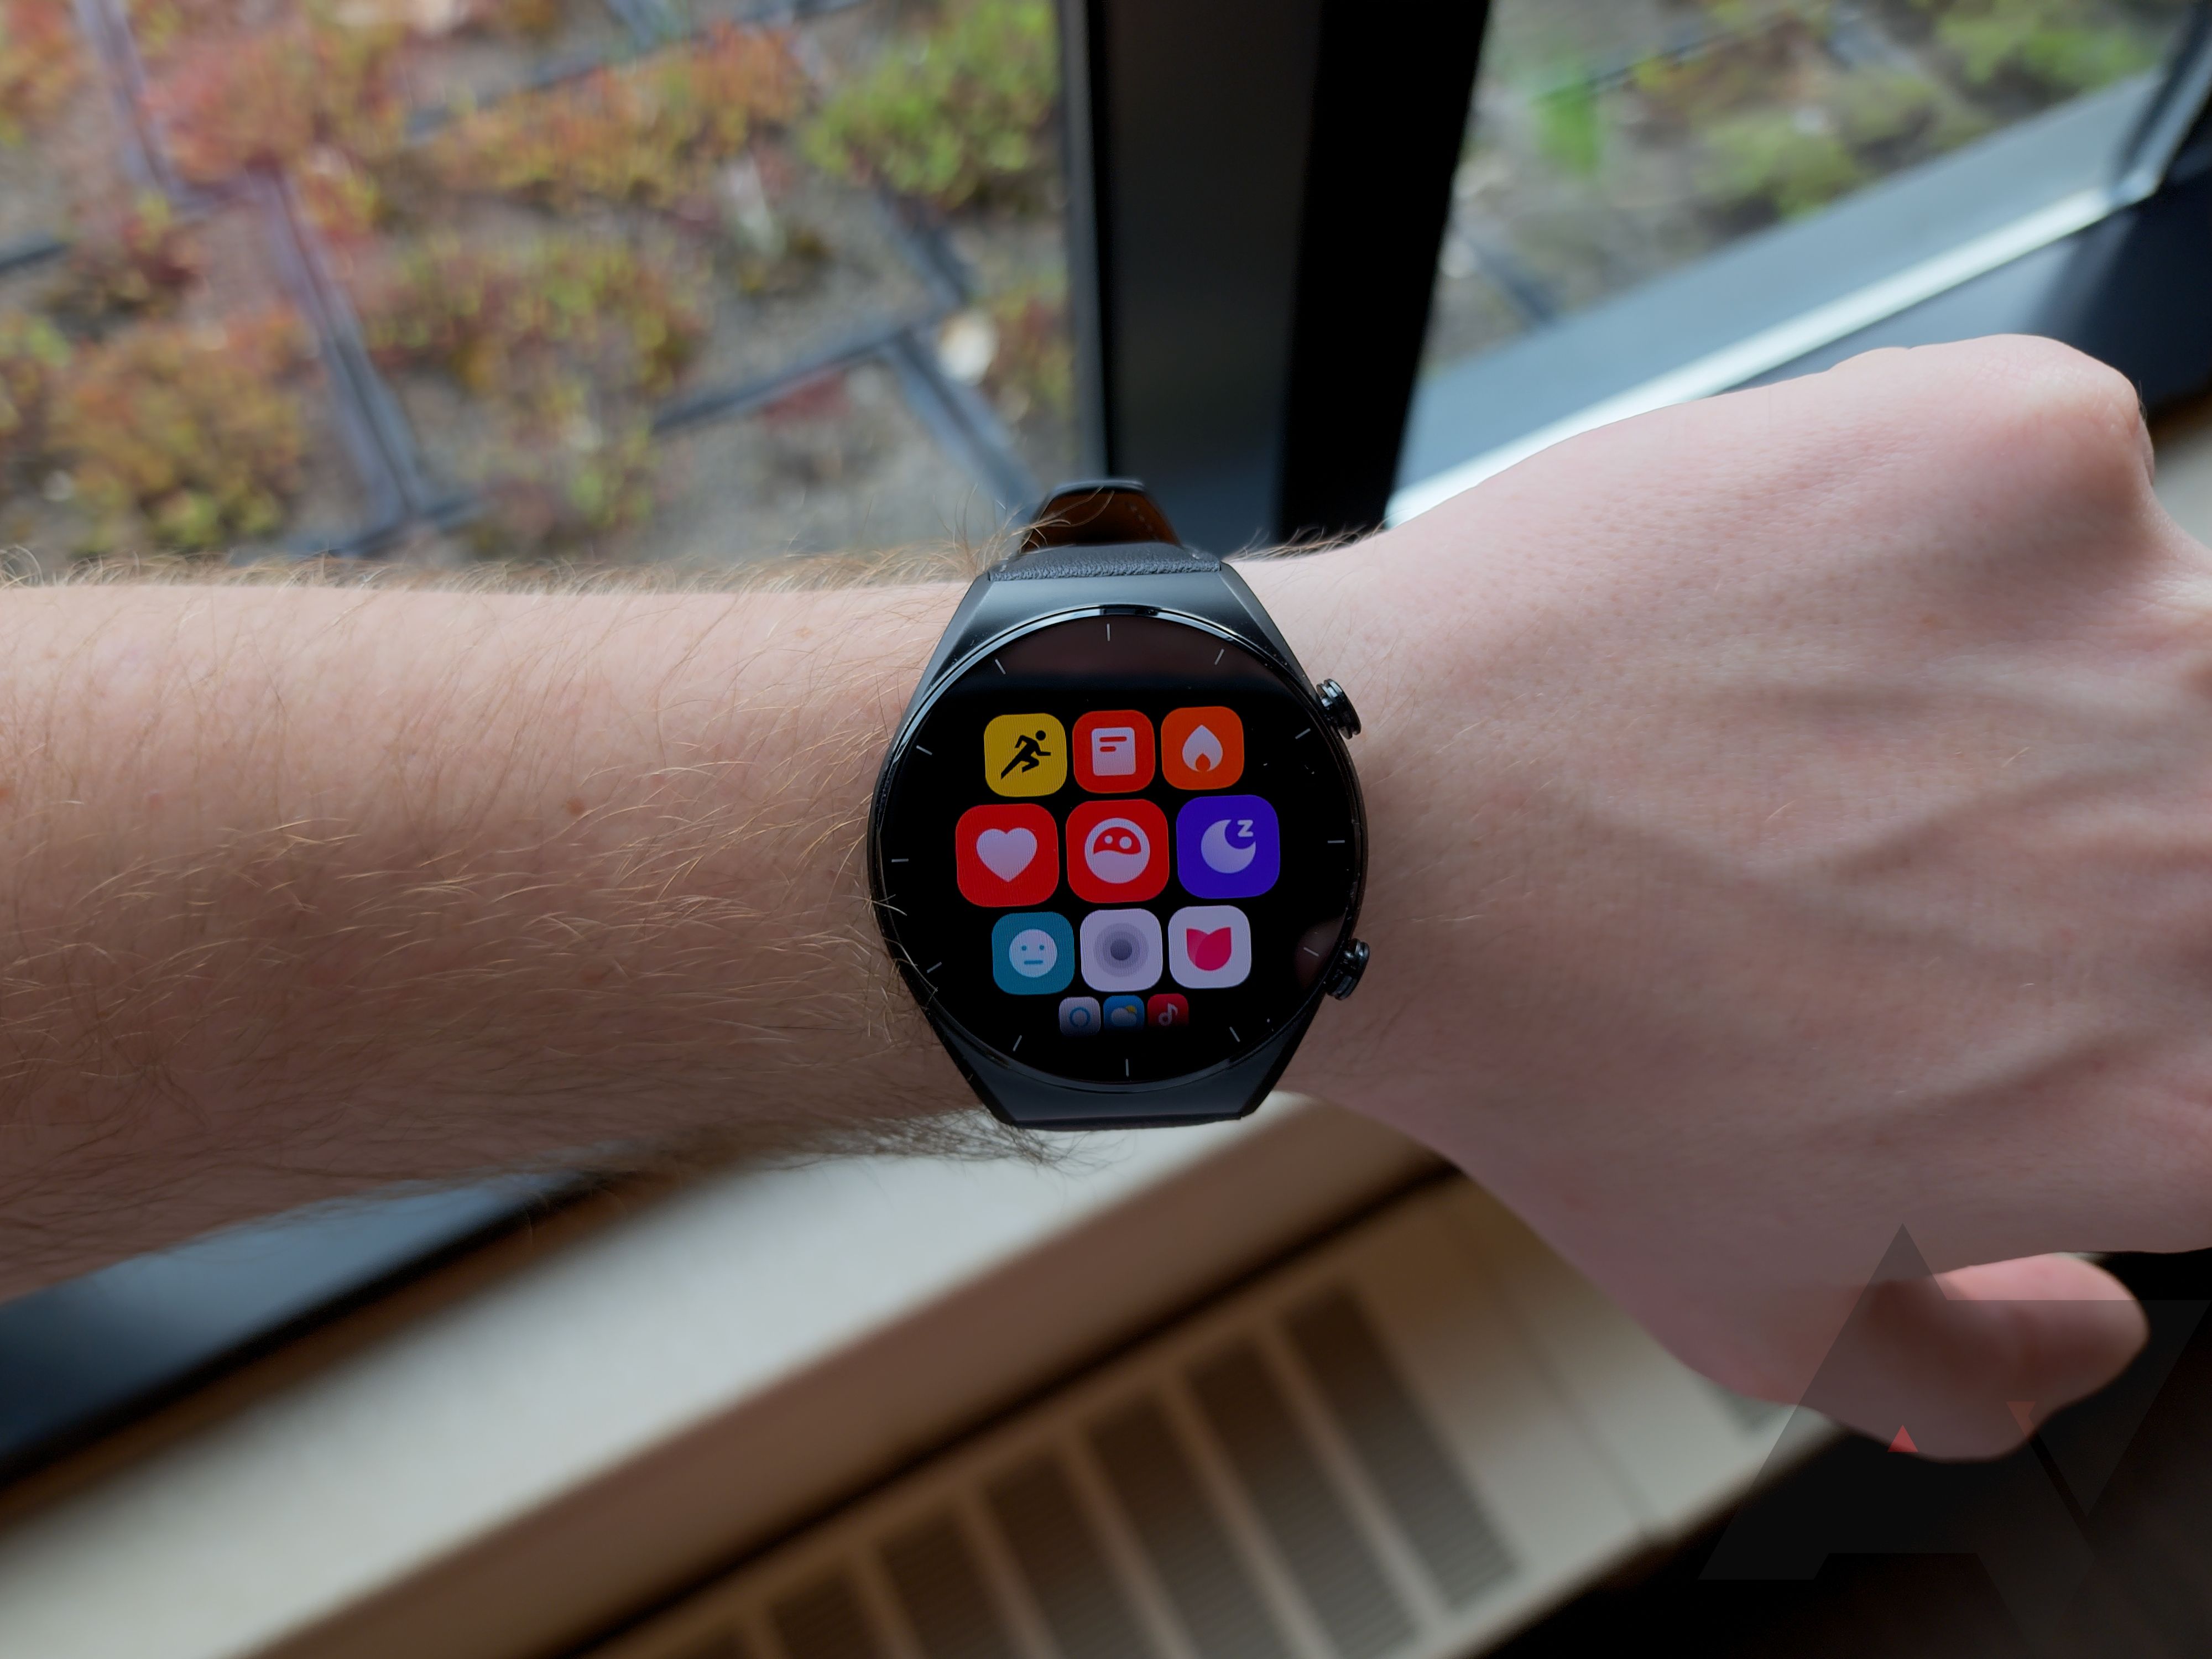 Xiaomi Watch S1 Pro, review y opiniones